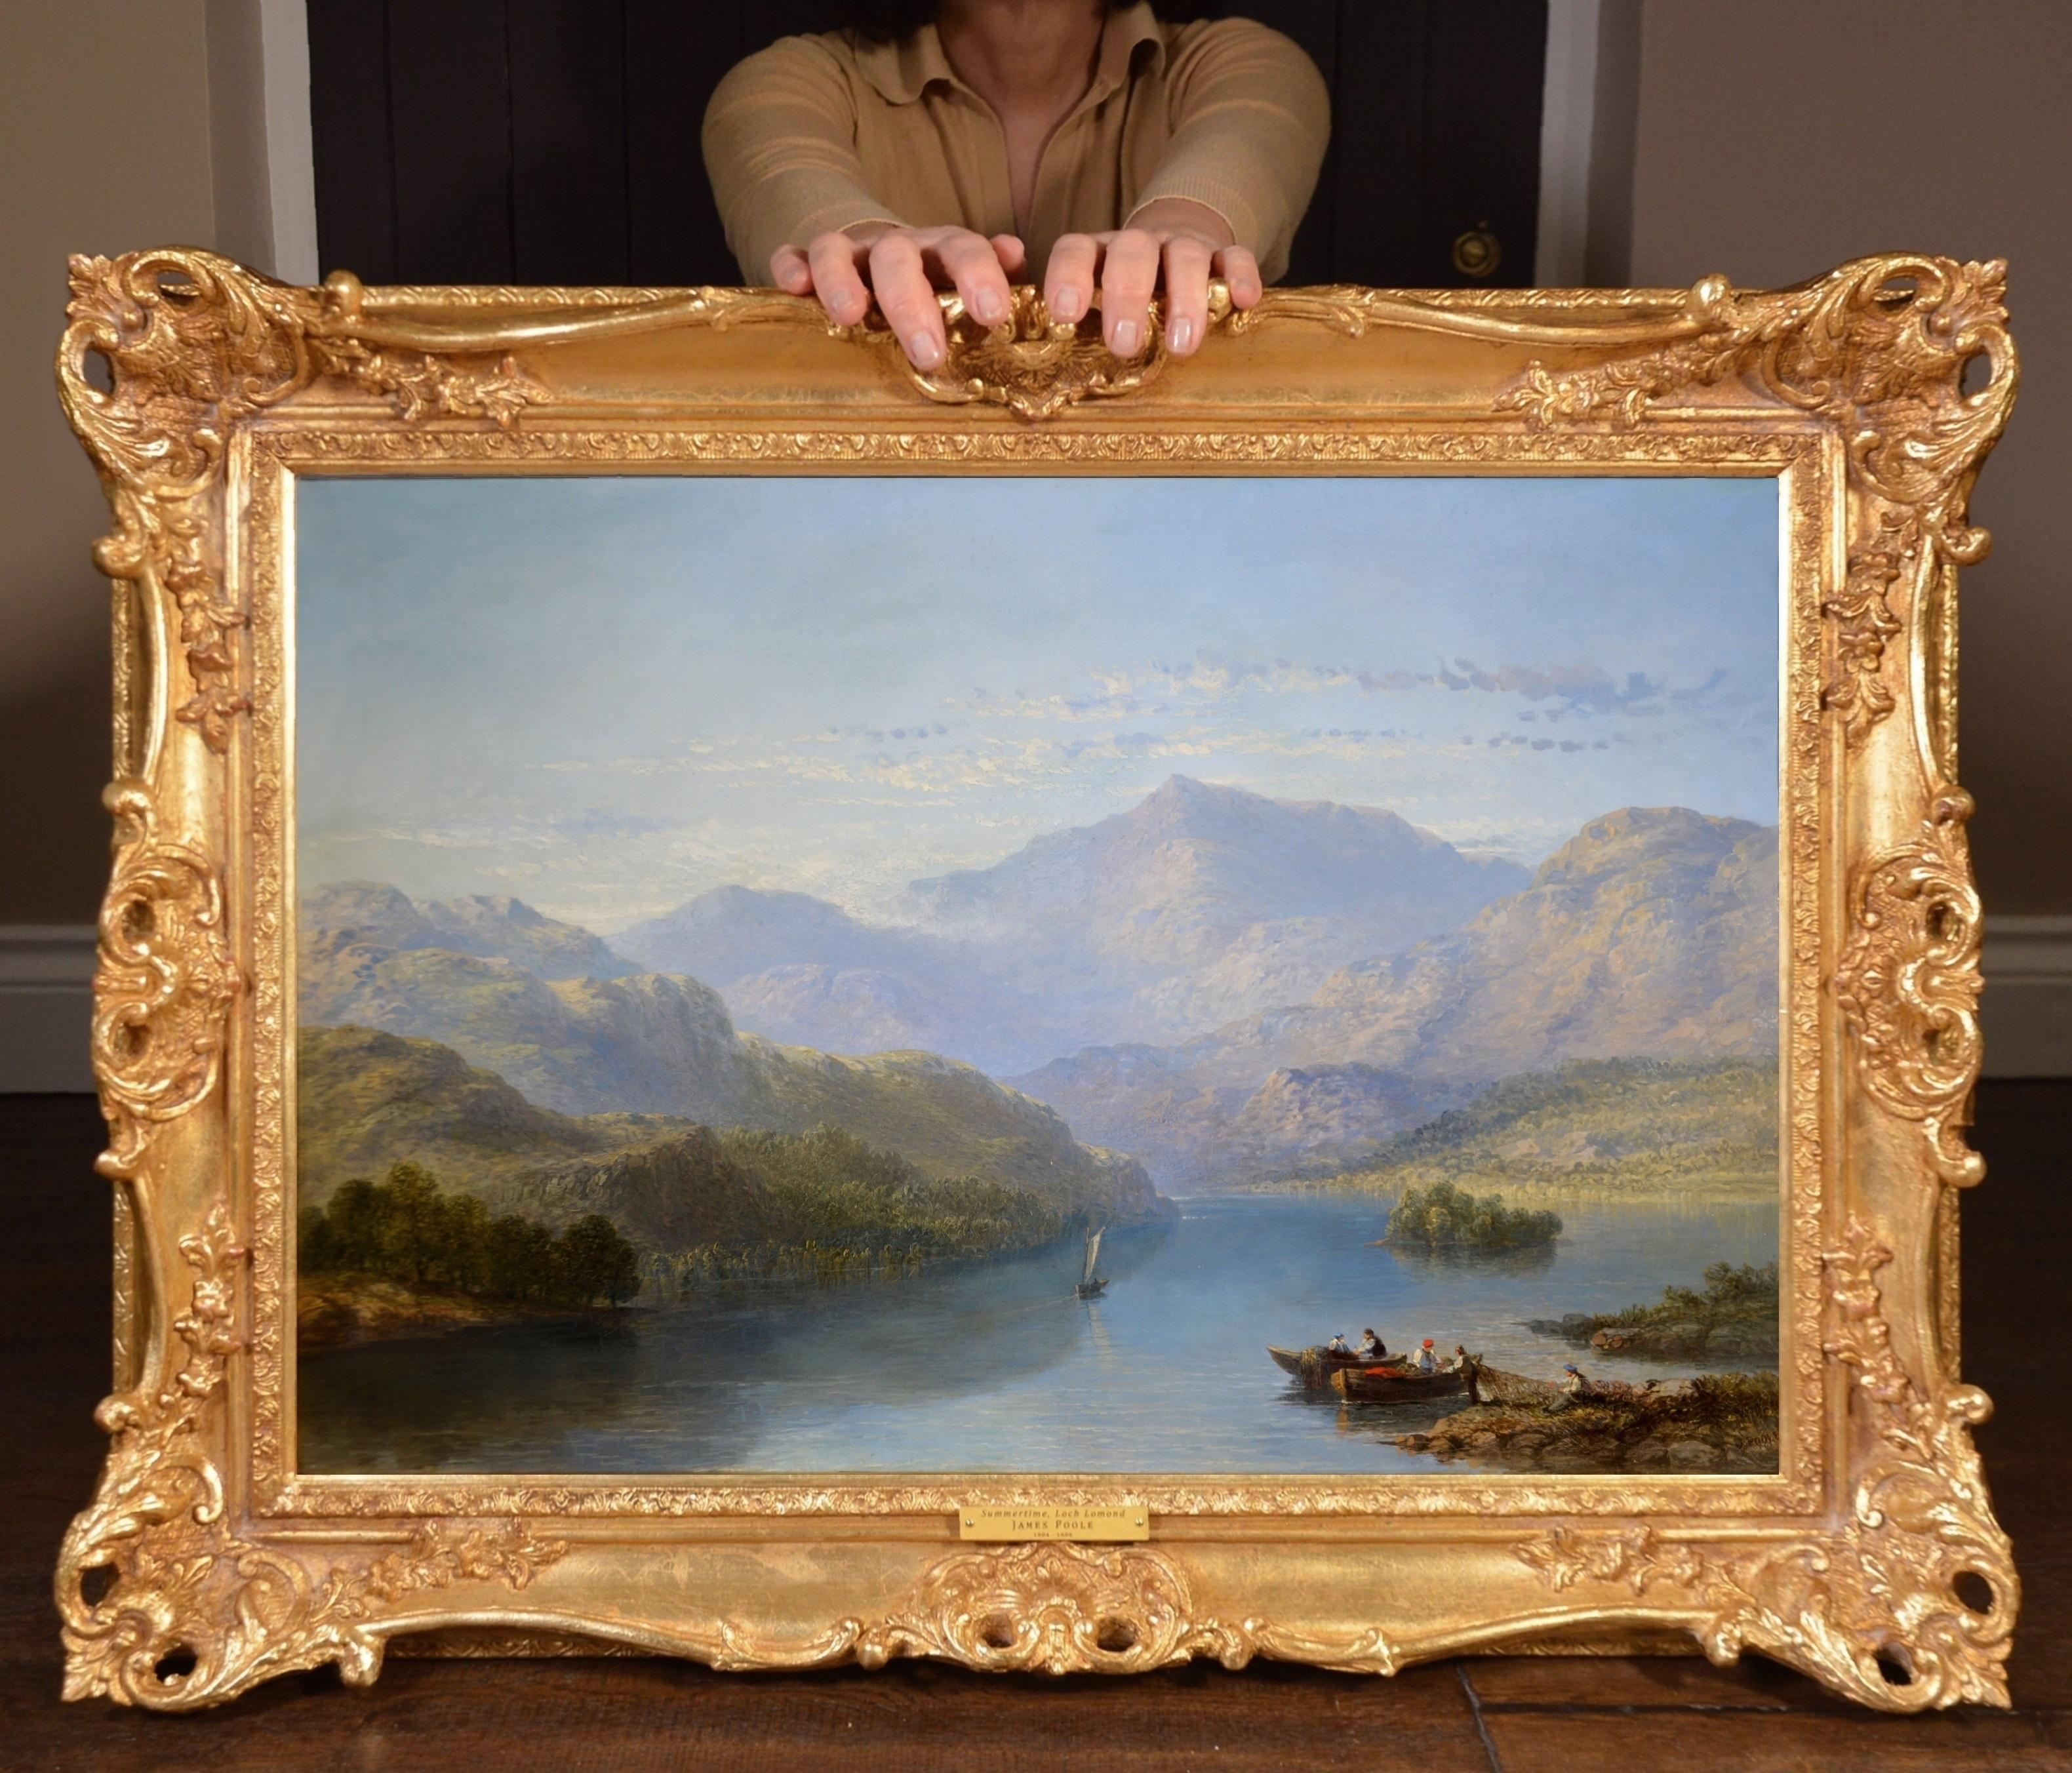 James Poole Landscape Painting - Summertime, Loch Lomond - 19th Century Scottish Highlands Landscape Oil Painting